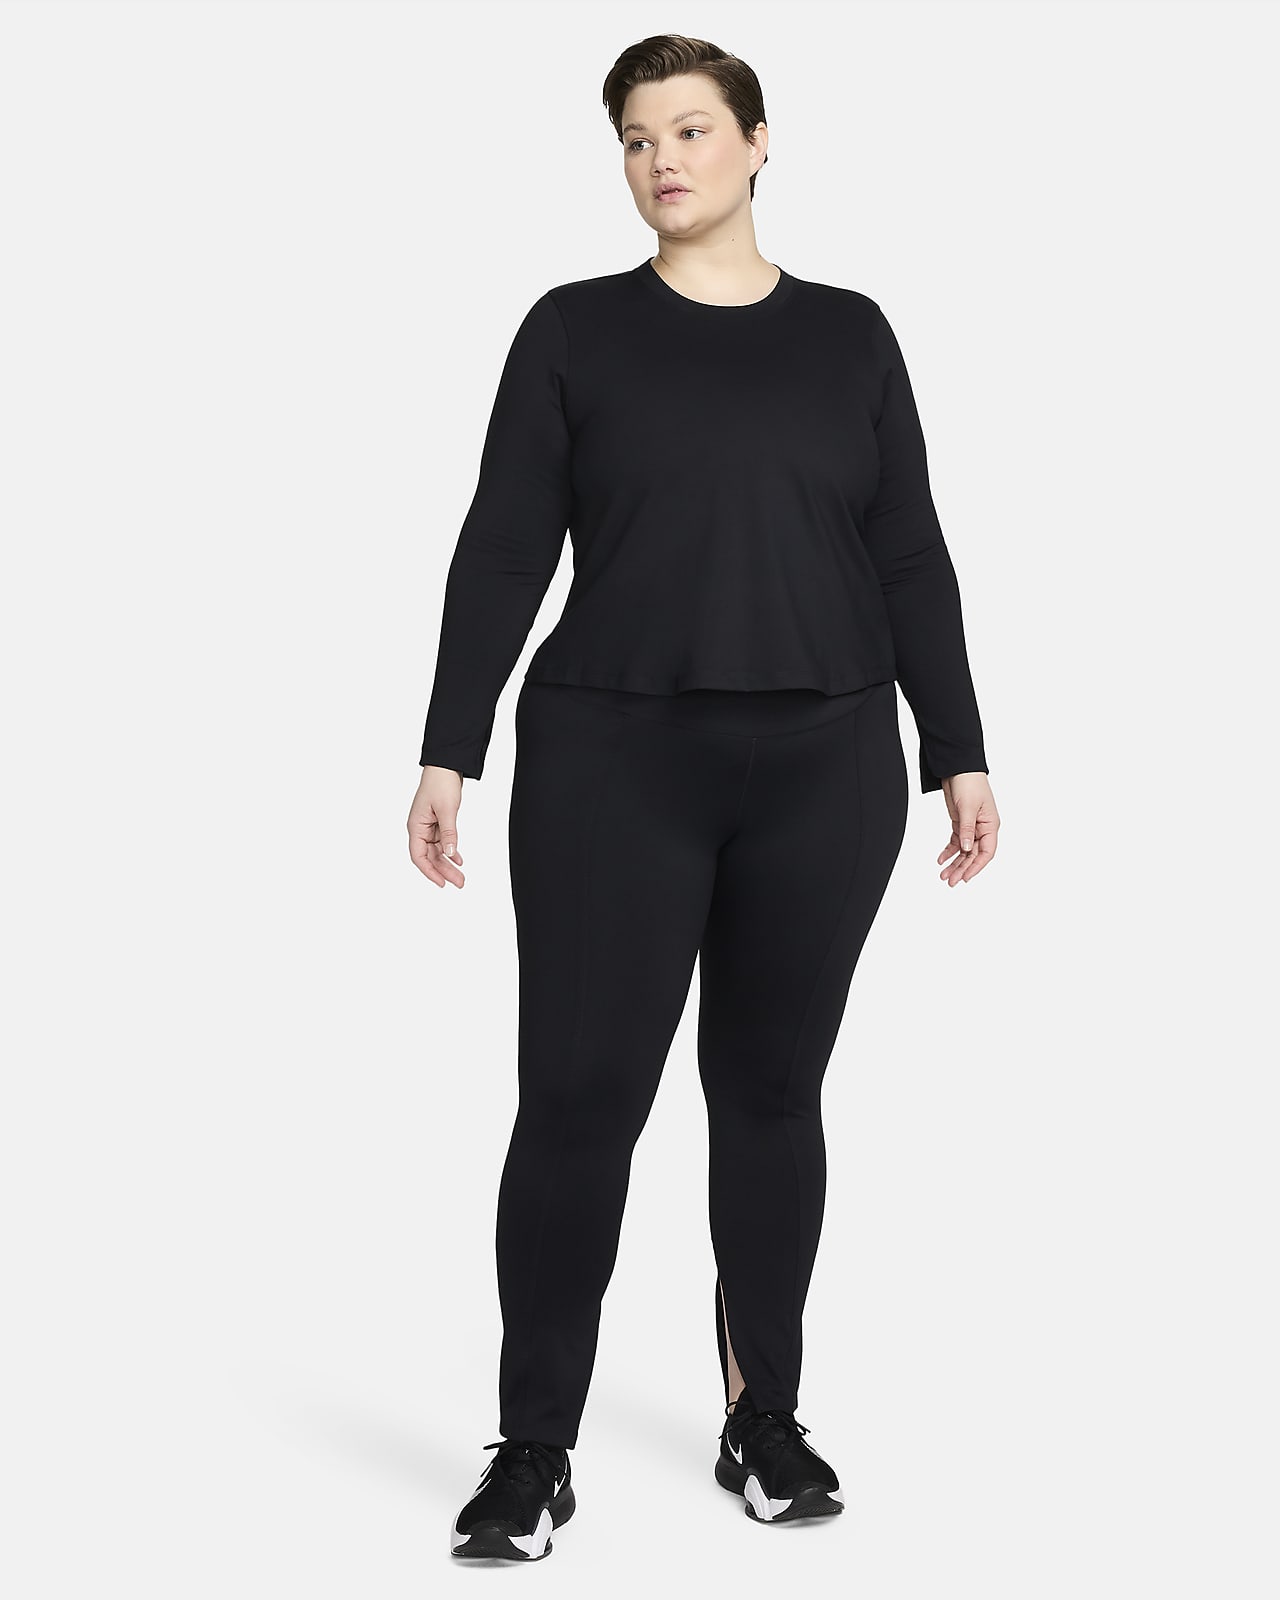 New Womens Large L-XL Nike Elite Knit Tight Long Tank Top Black $80  598184-010 on eBid United States